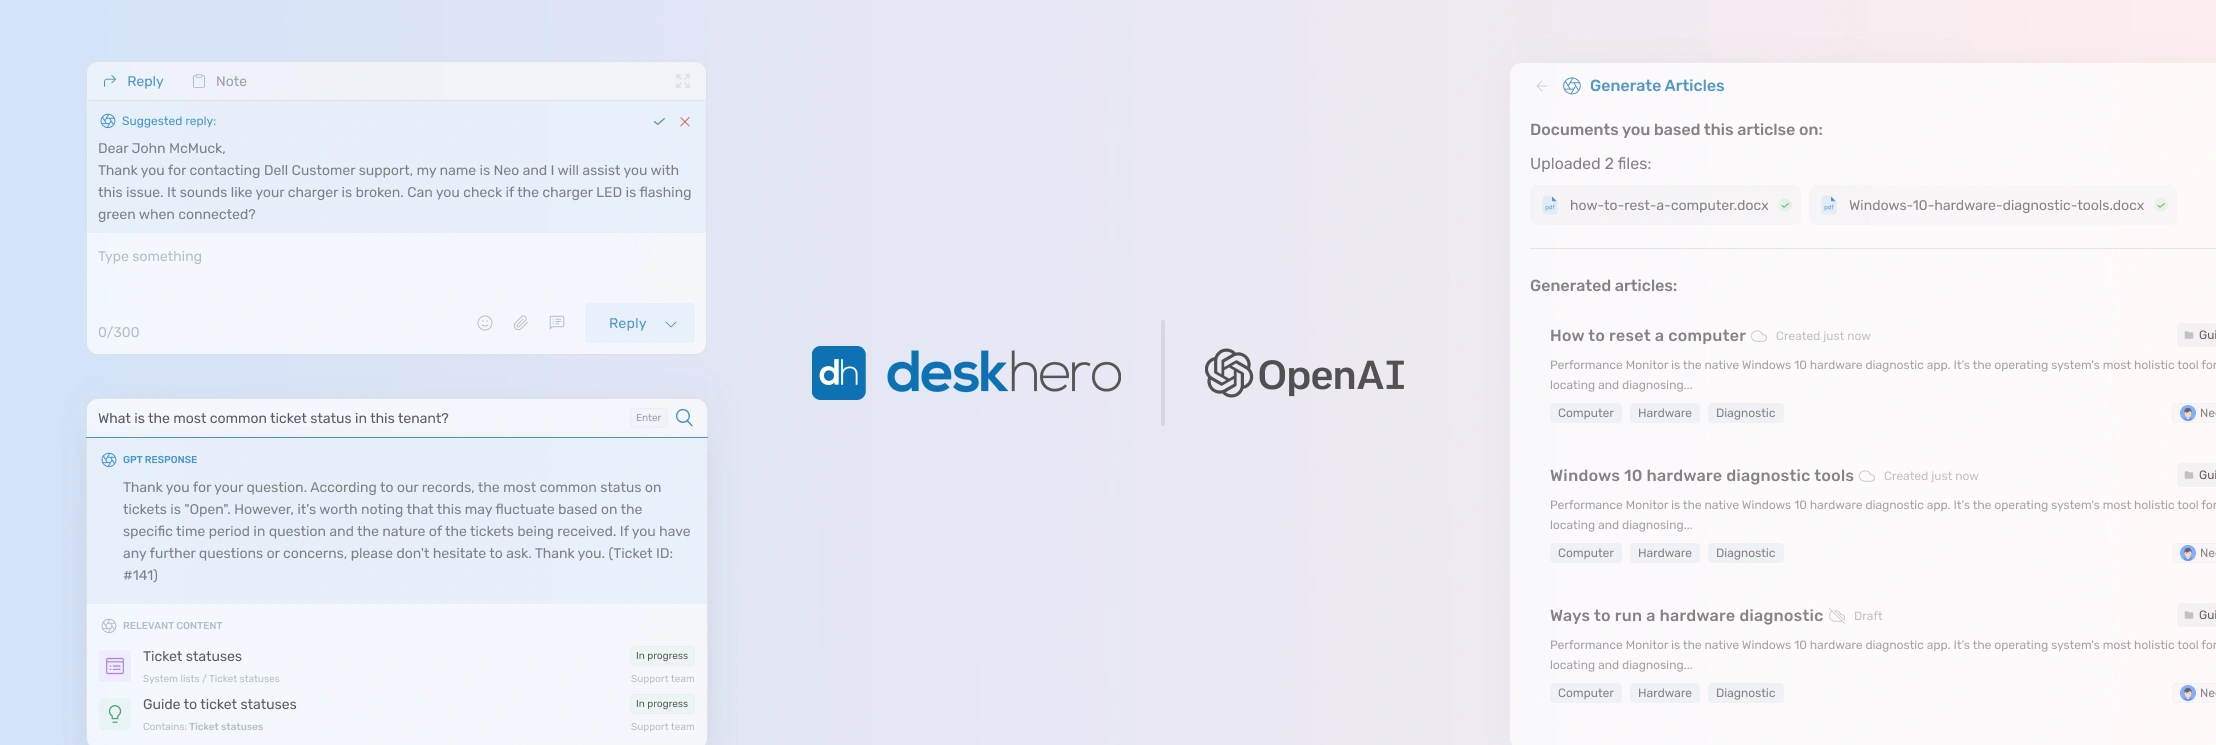 PrintPro: Optimizing Helpdesk Services with Deskhero's AI Capabilities